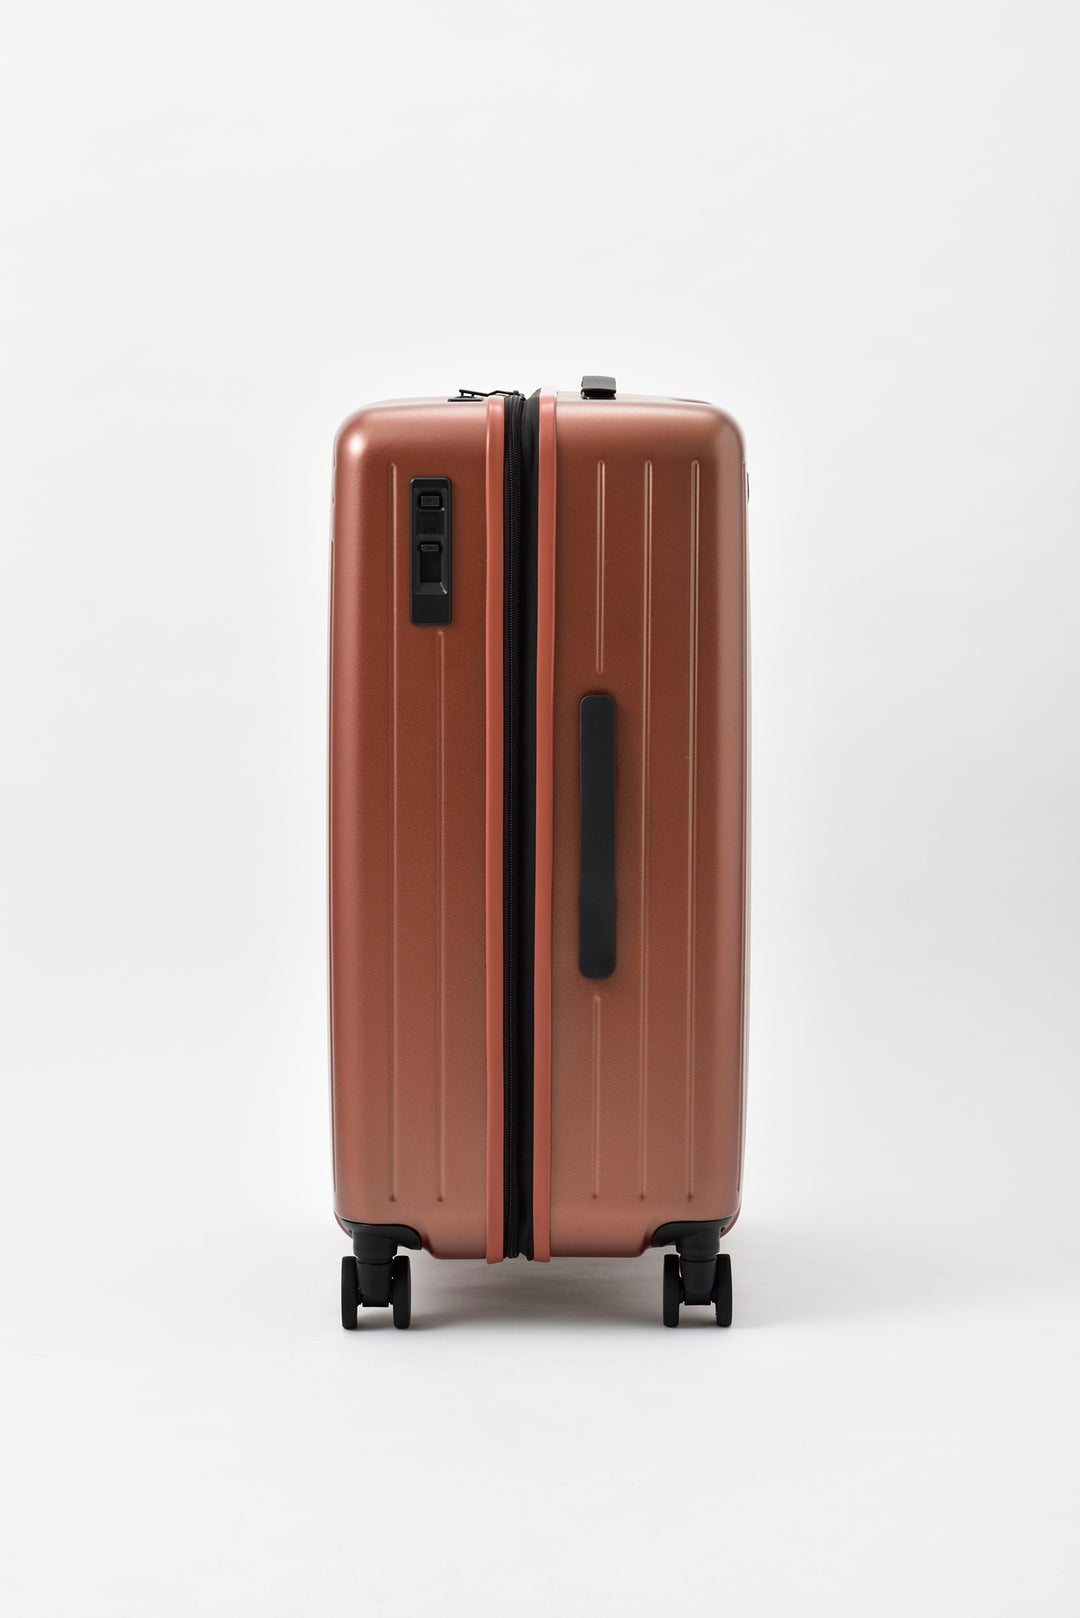 MILESTO UTILITY Expandable Luggage (75-81L) - Green MLS890-BTGR